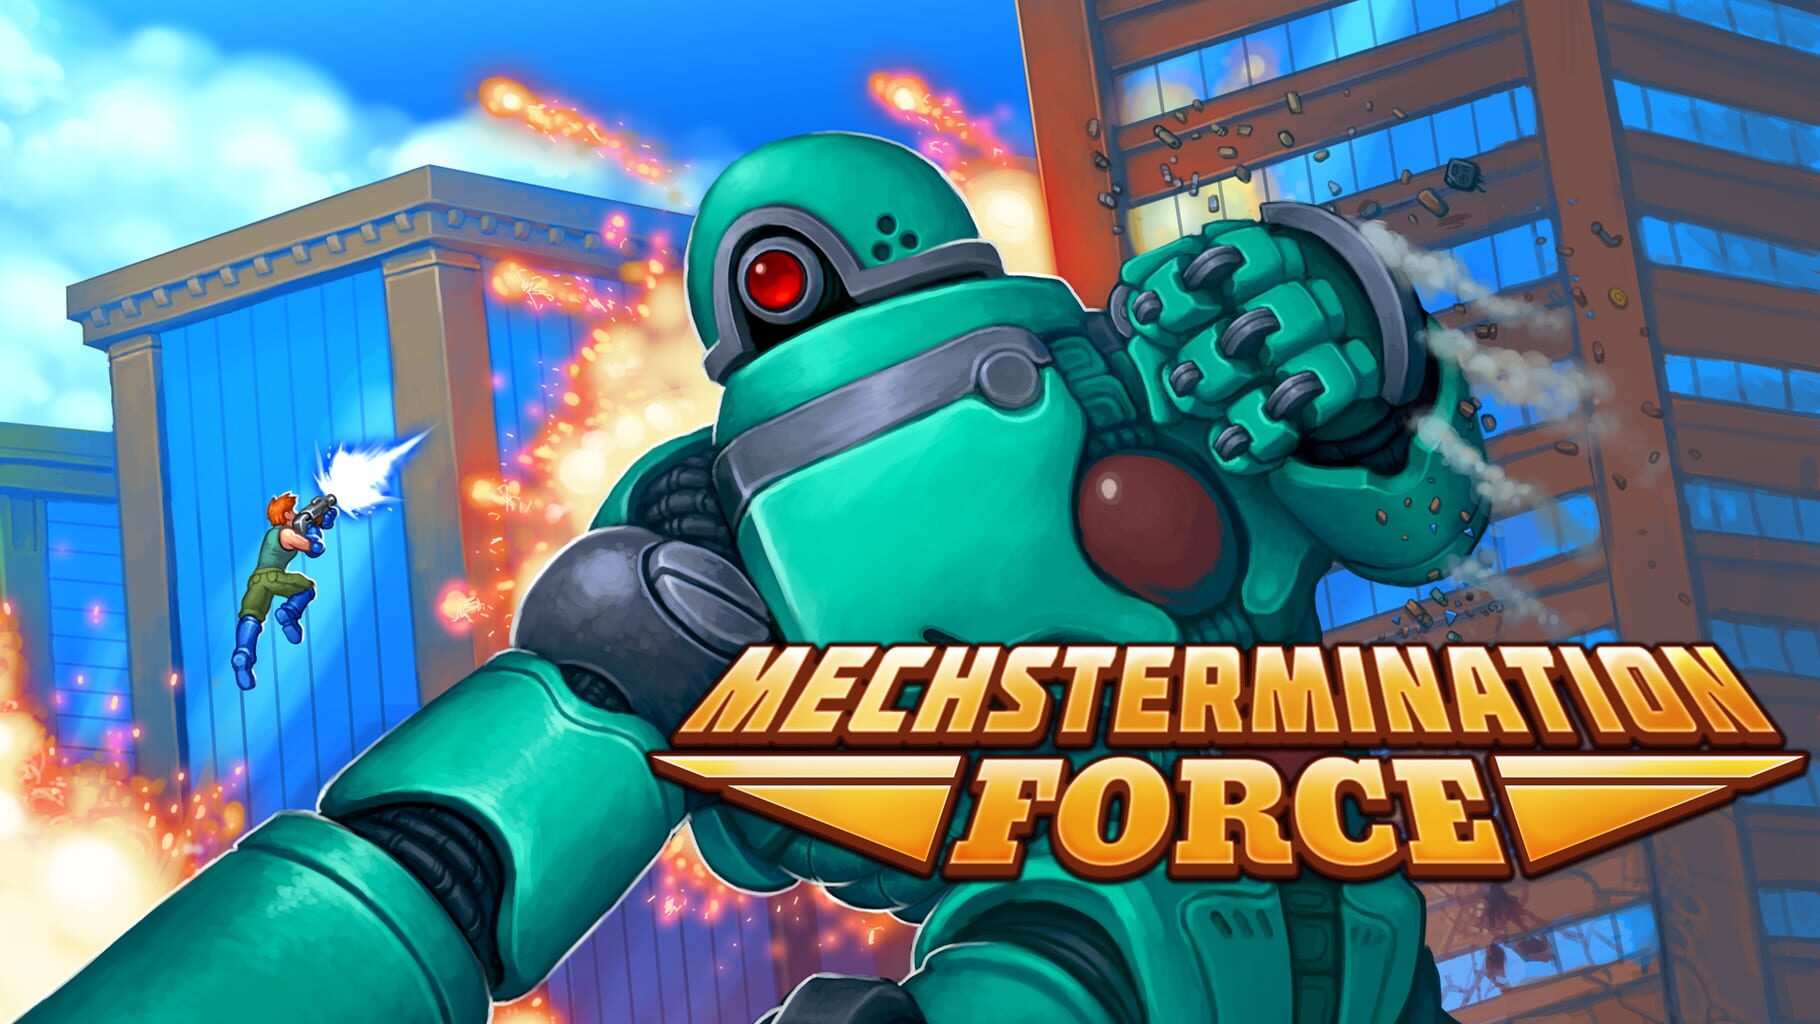 Mechstermination Force artwork